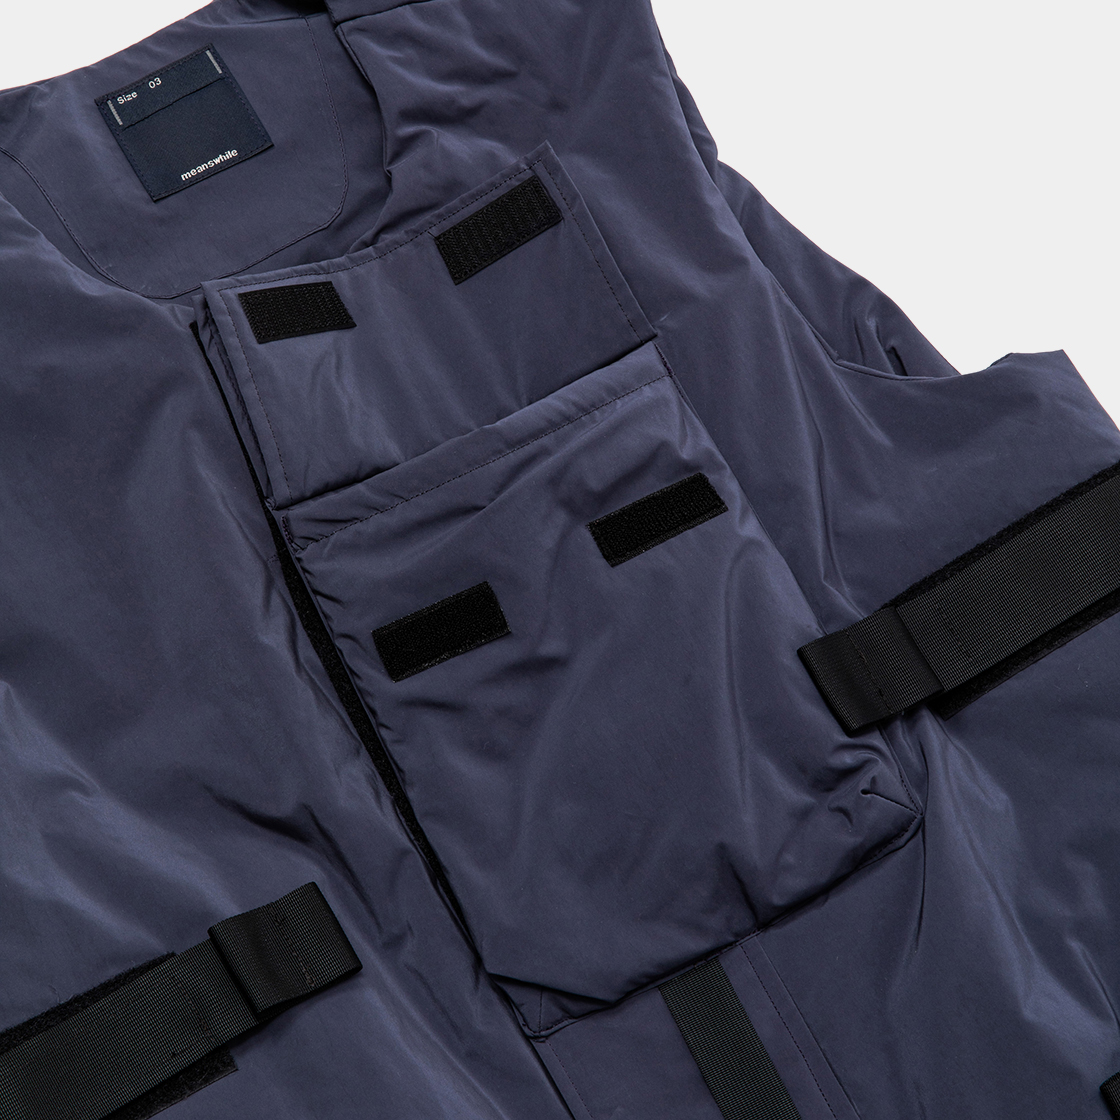 Padding Body Armor Vest / Taupe